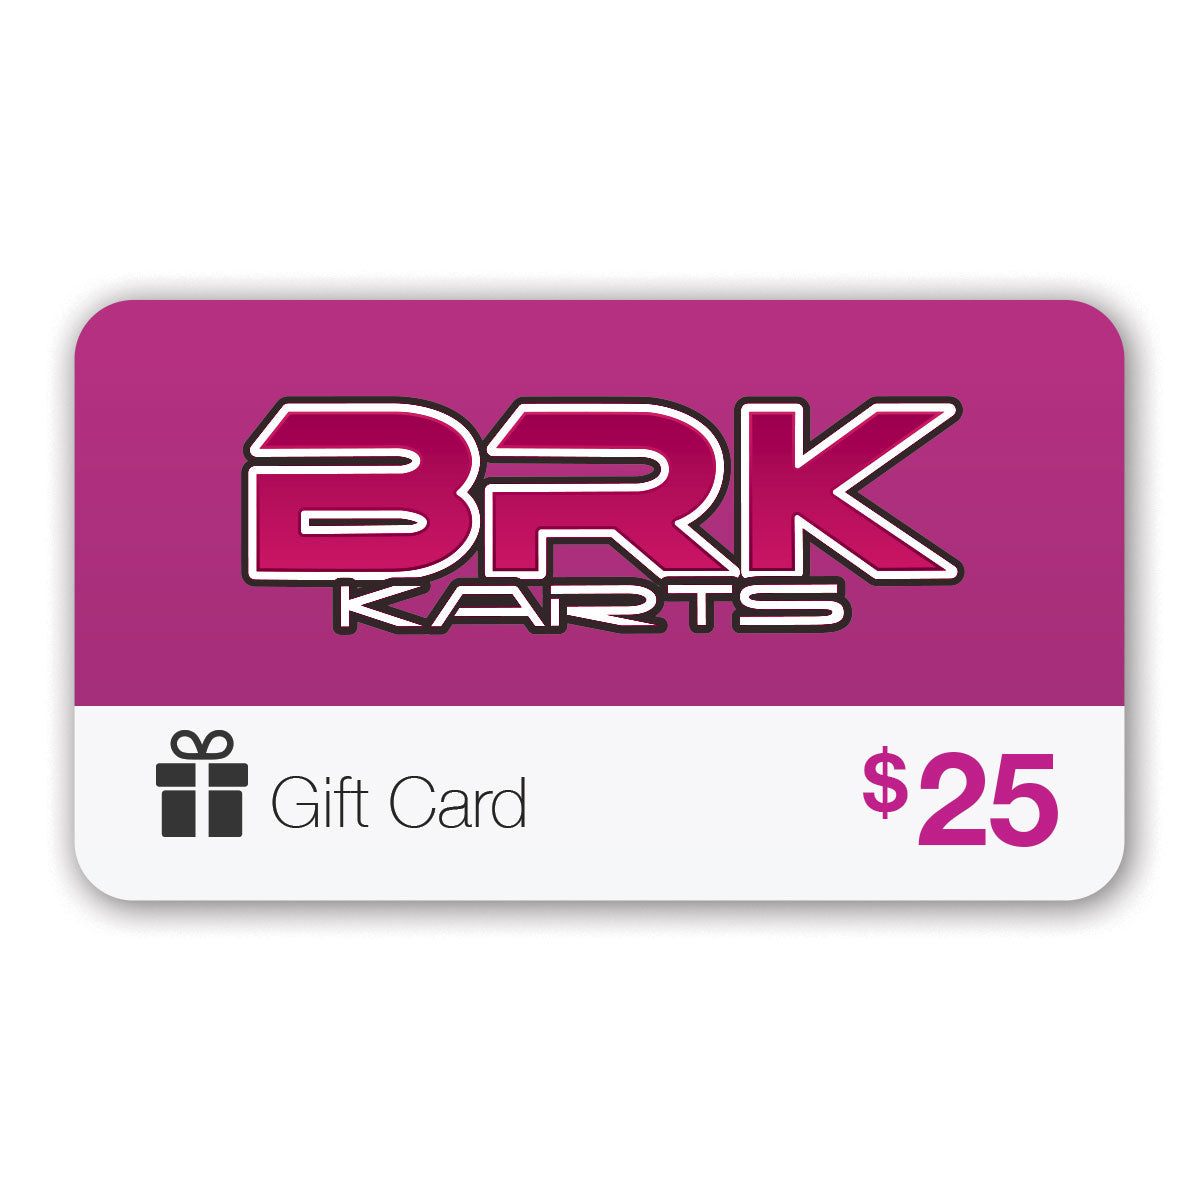 BRK Karts Gift Card - $25